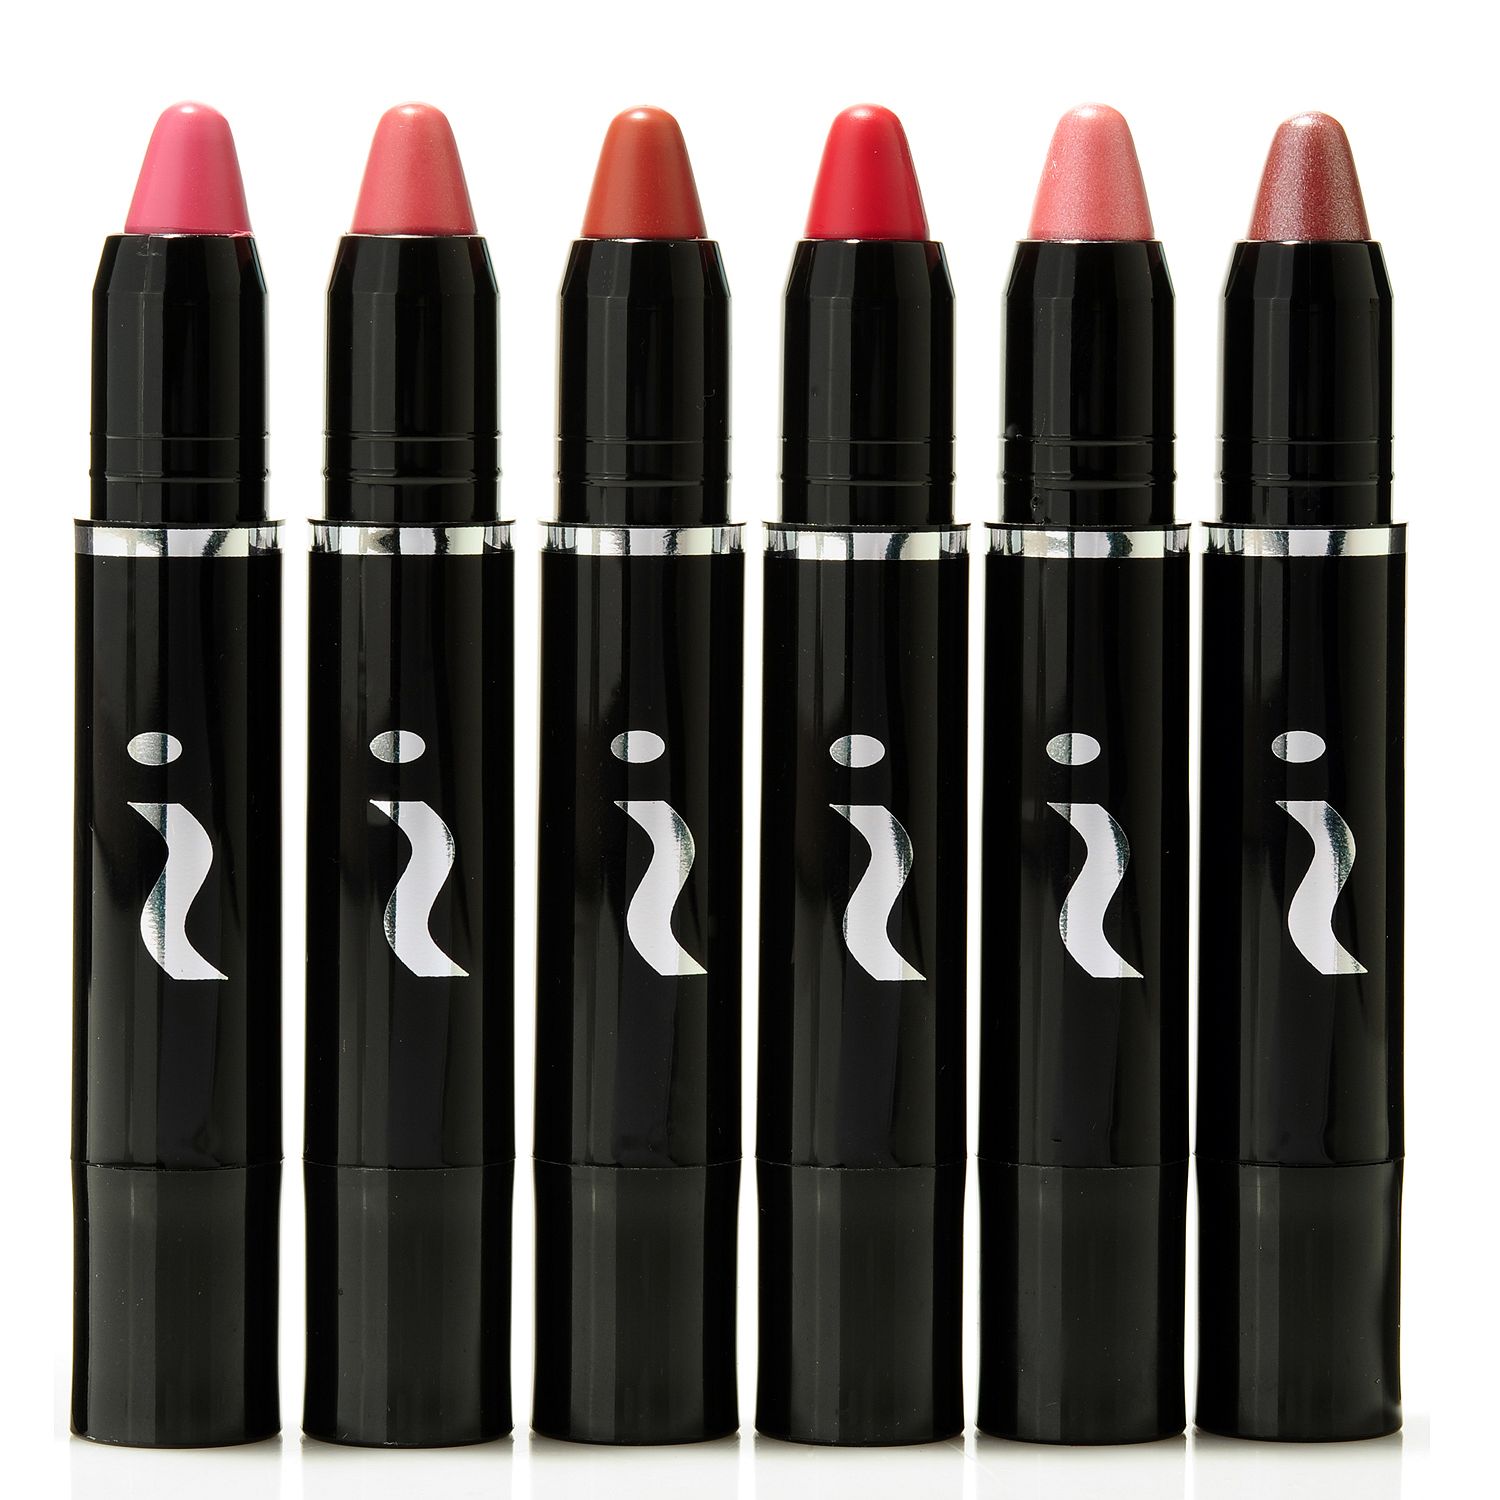 306-844- Skinn Cosmetics Six-Piece Glosstick Moisturizing Lip Color Collection